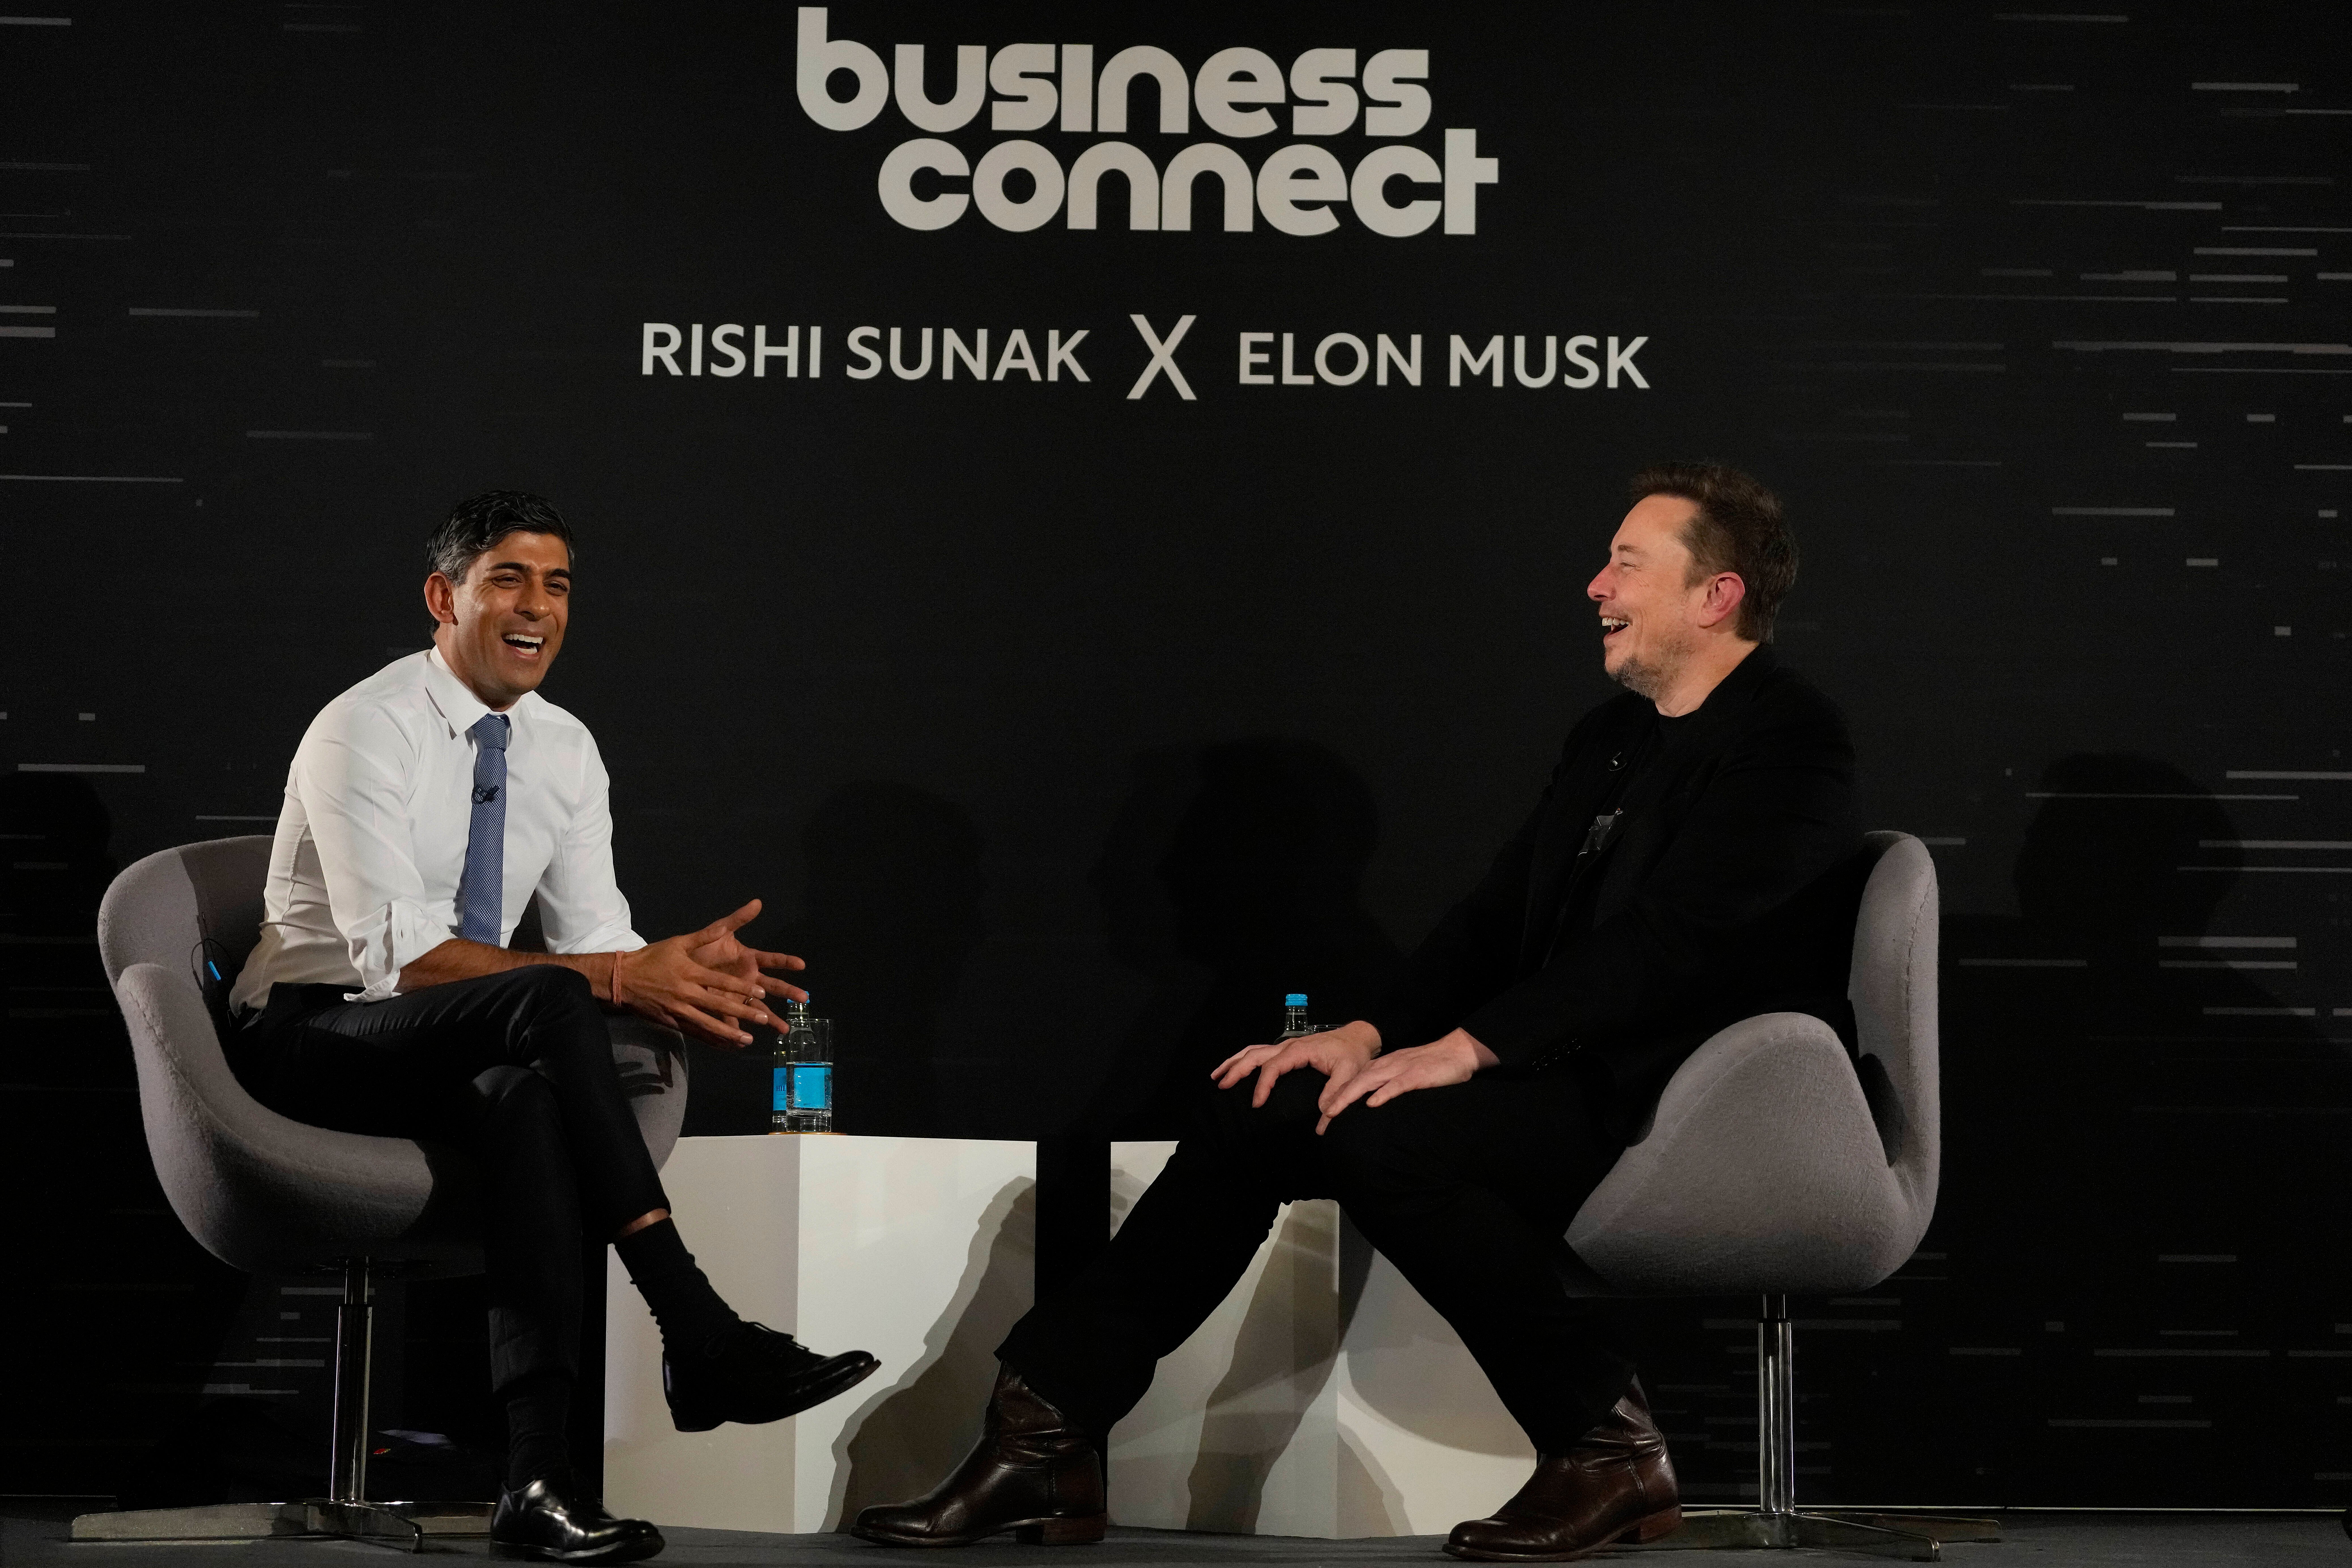 Rishi Sunak and Elon Musk joked about Terminator movies